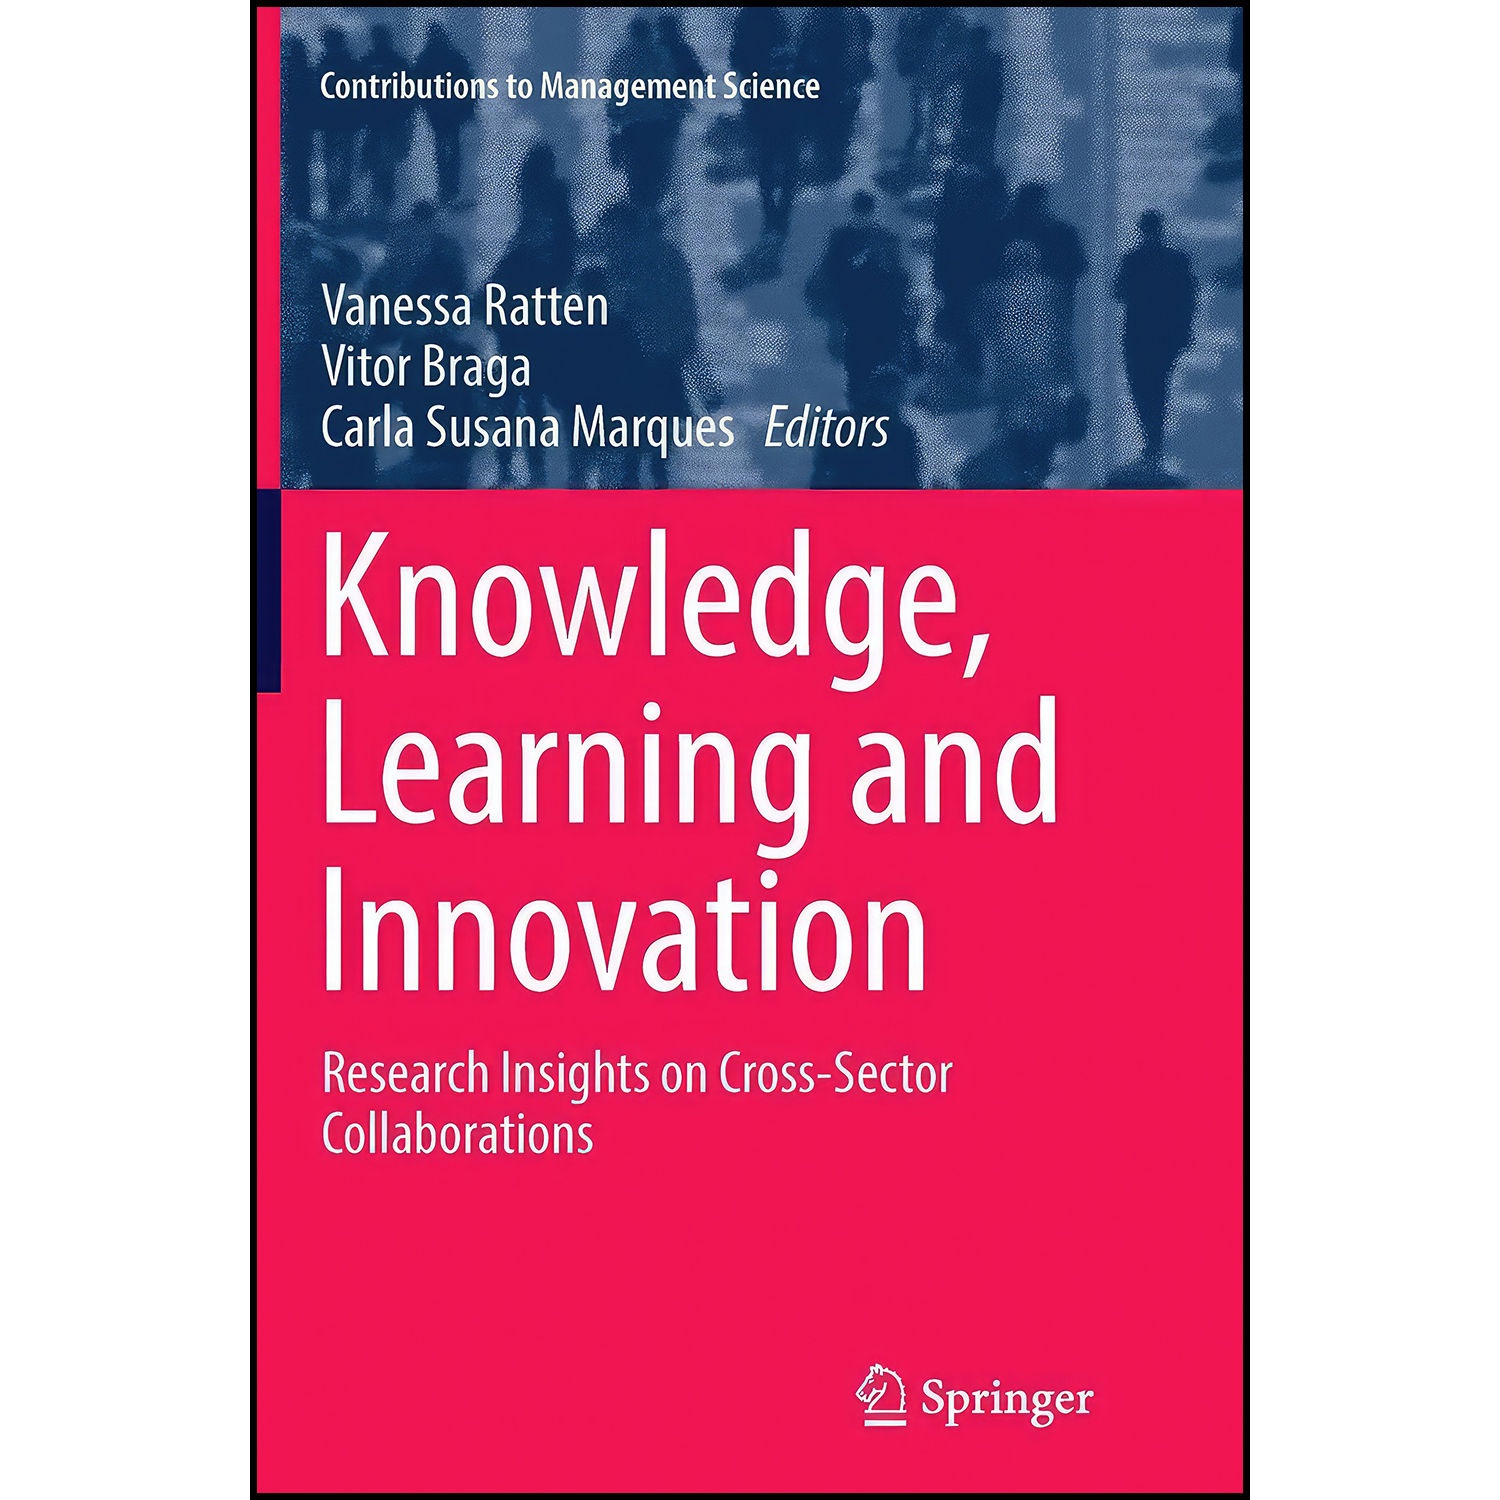 کتاب Knowledge, Learning and Innovation اثر جمعي از نويسندگان انتشارات بله